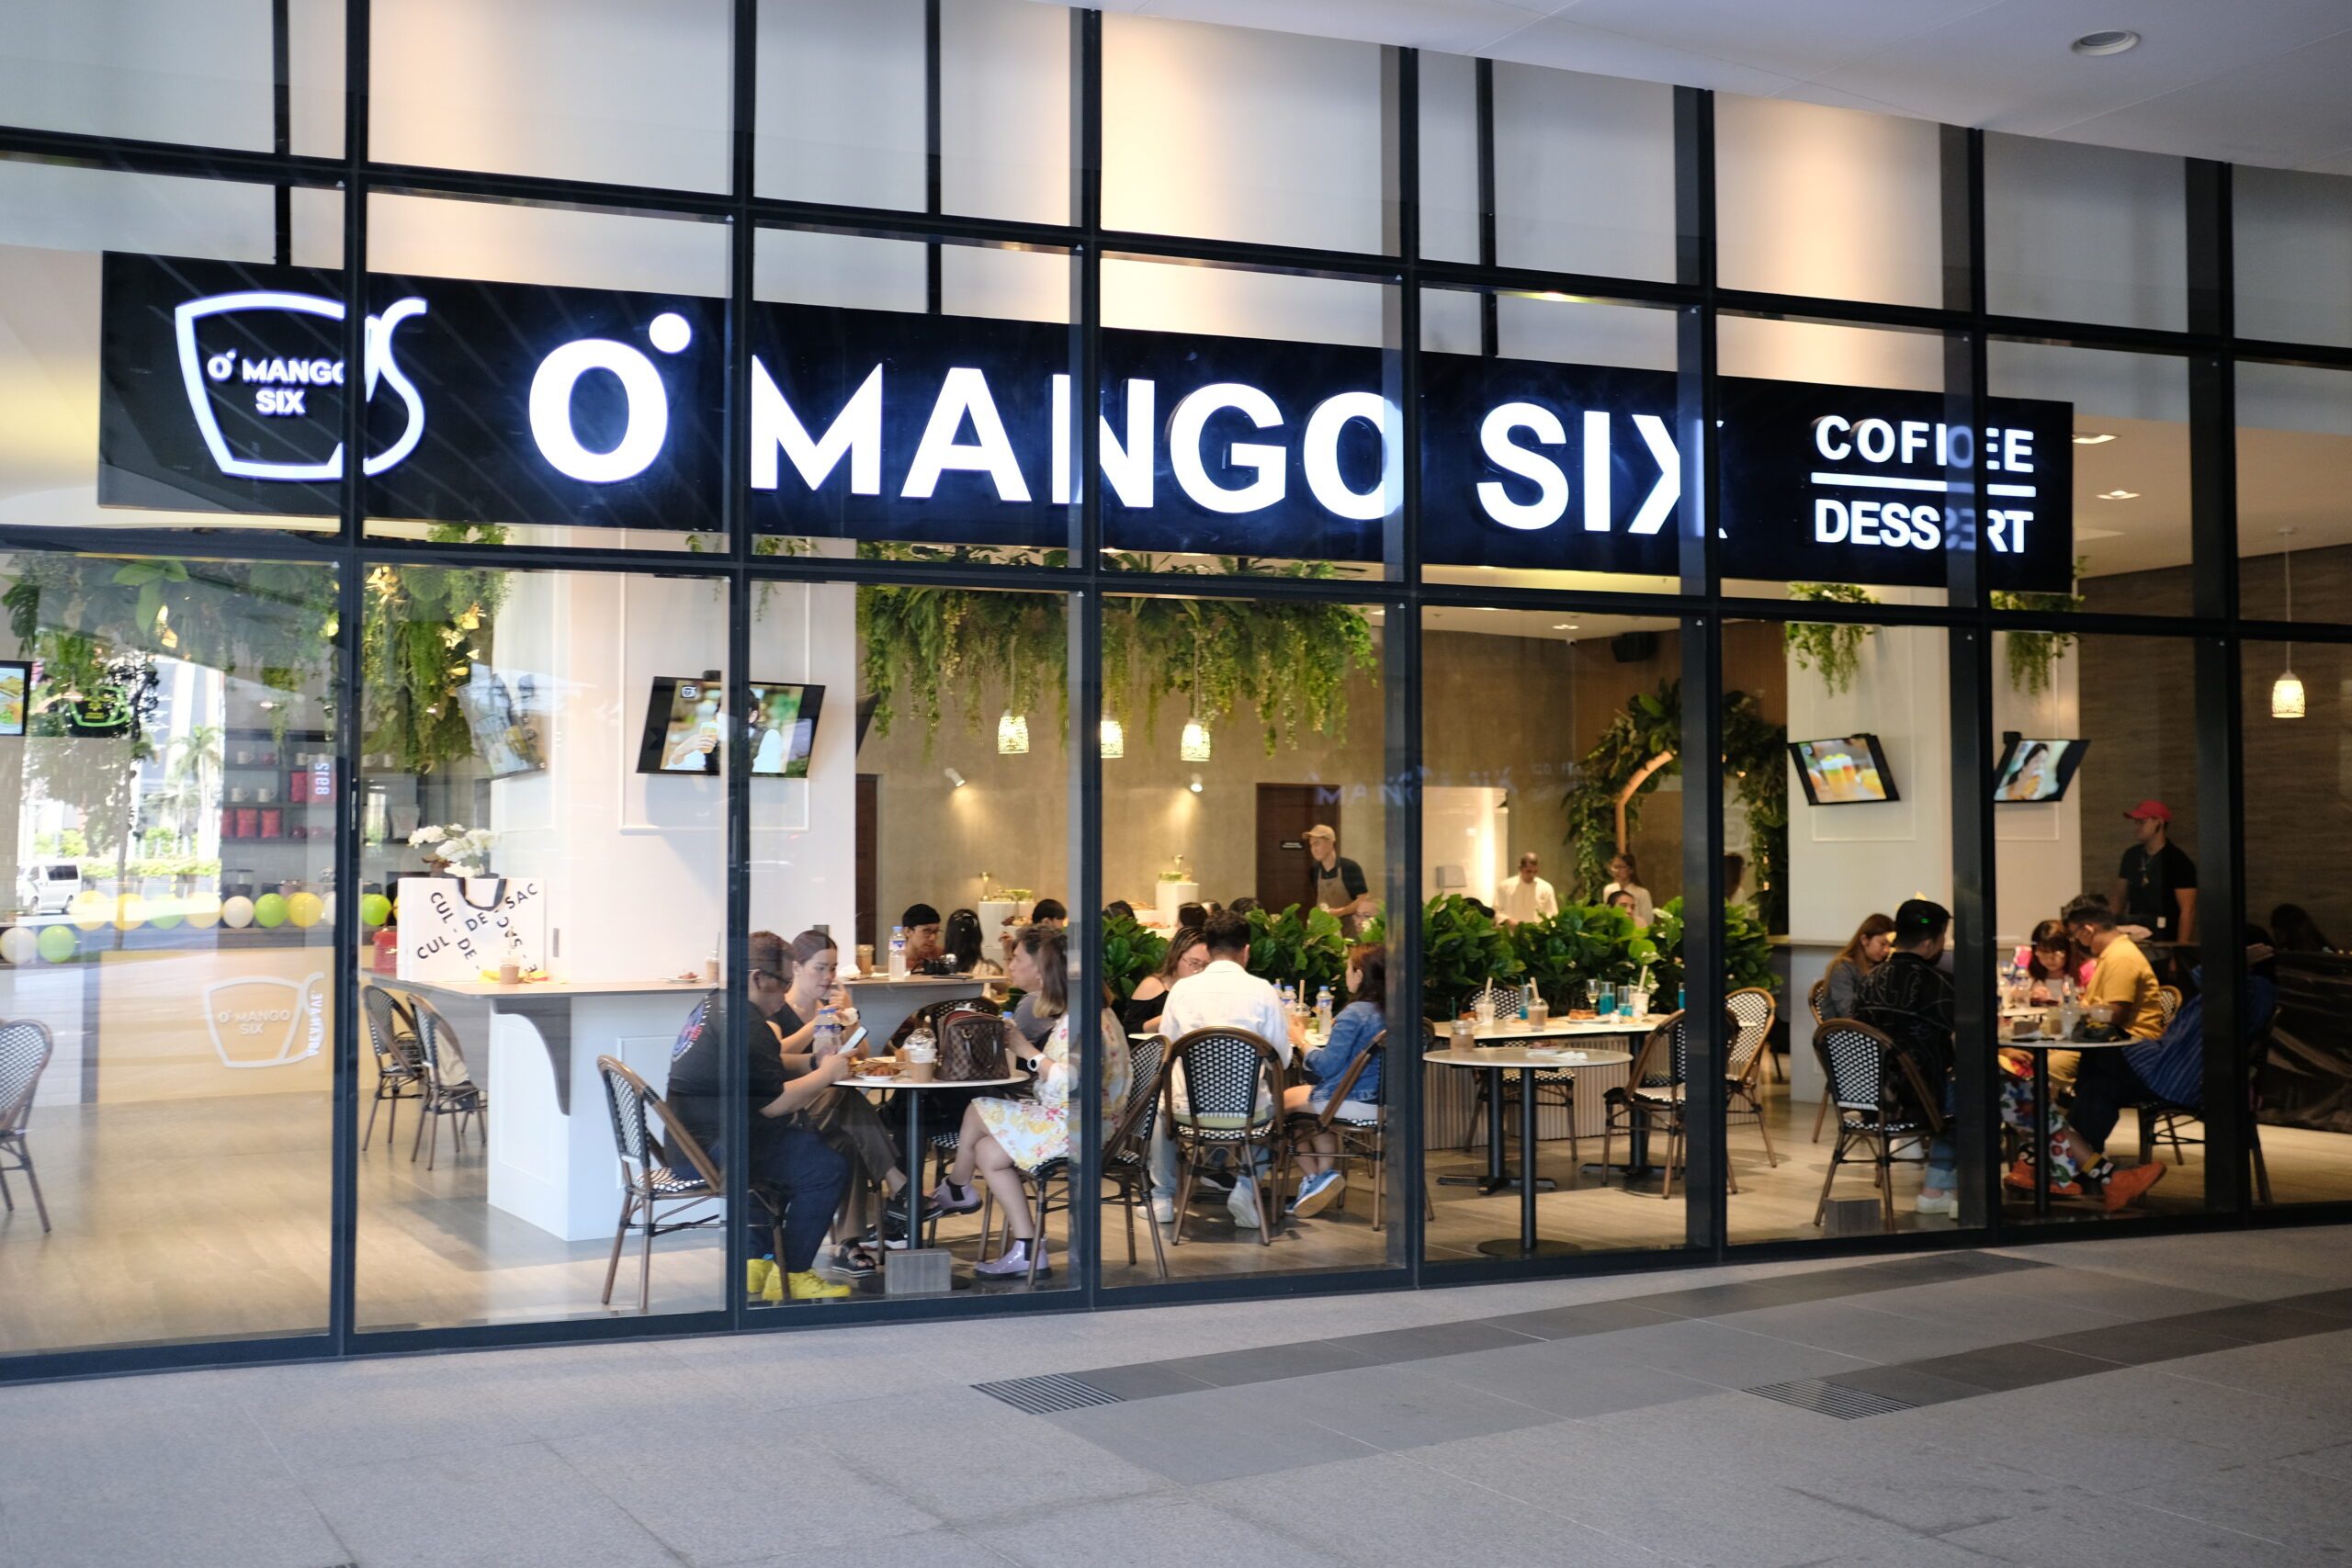 Where to Buy Amazing Korean-Style Glassware in Manila